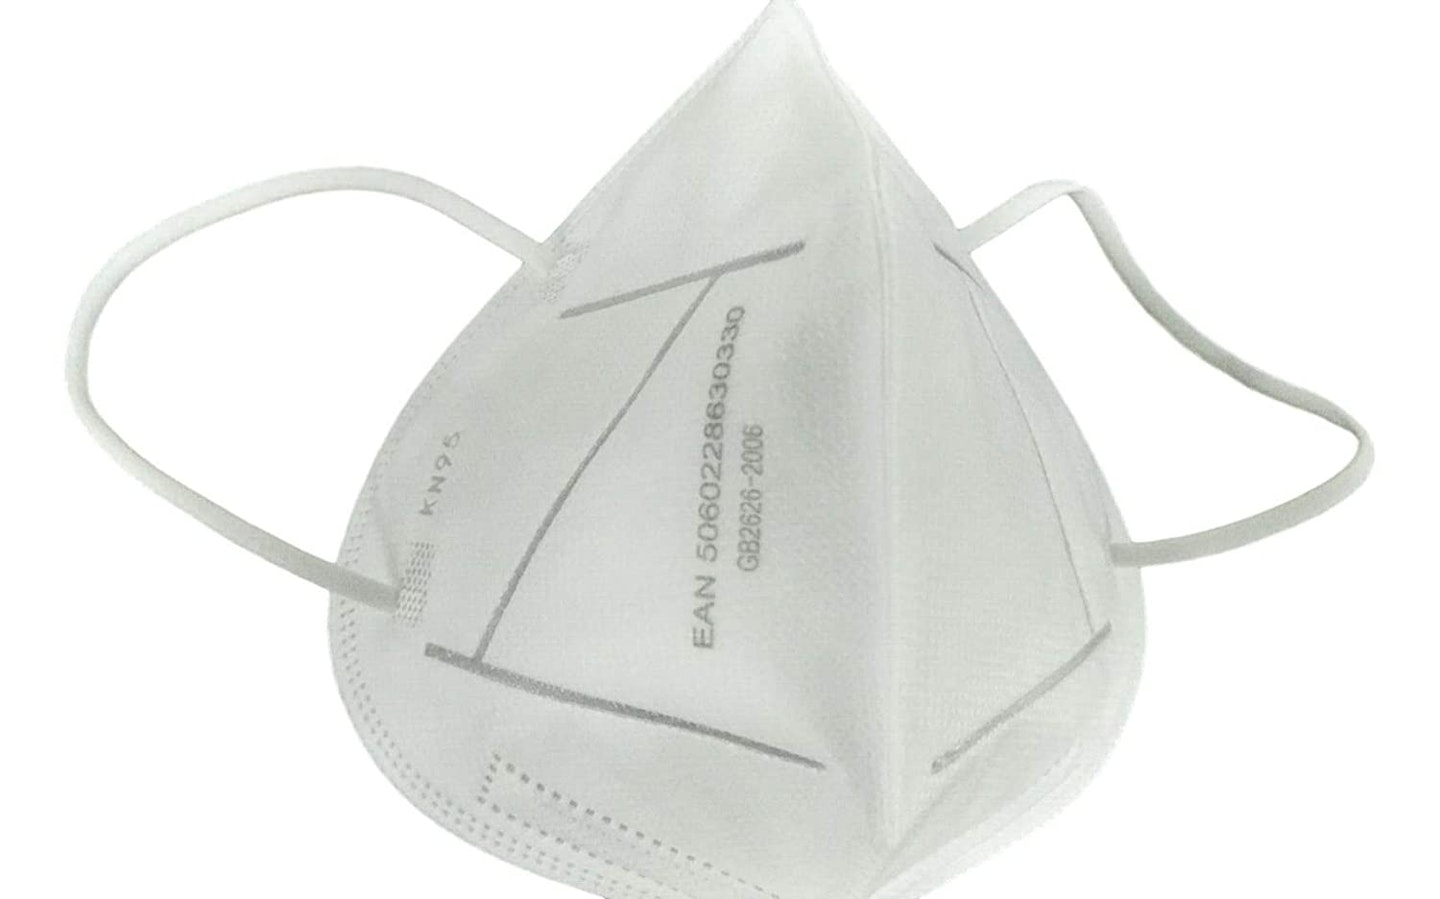 MYAID Medical Cup Face Mask, 98% Bacterial Filtration, 10 masks for £13.50